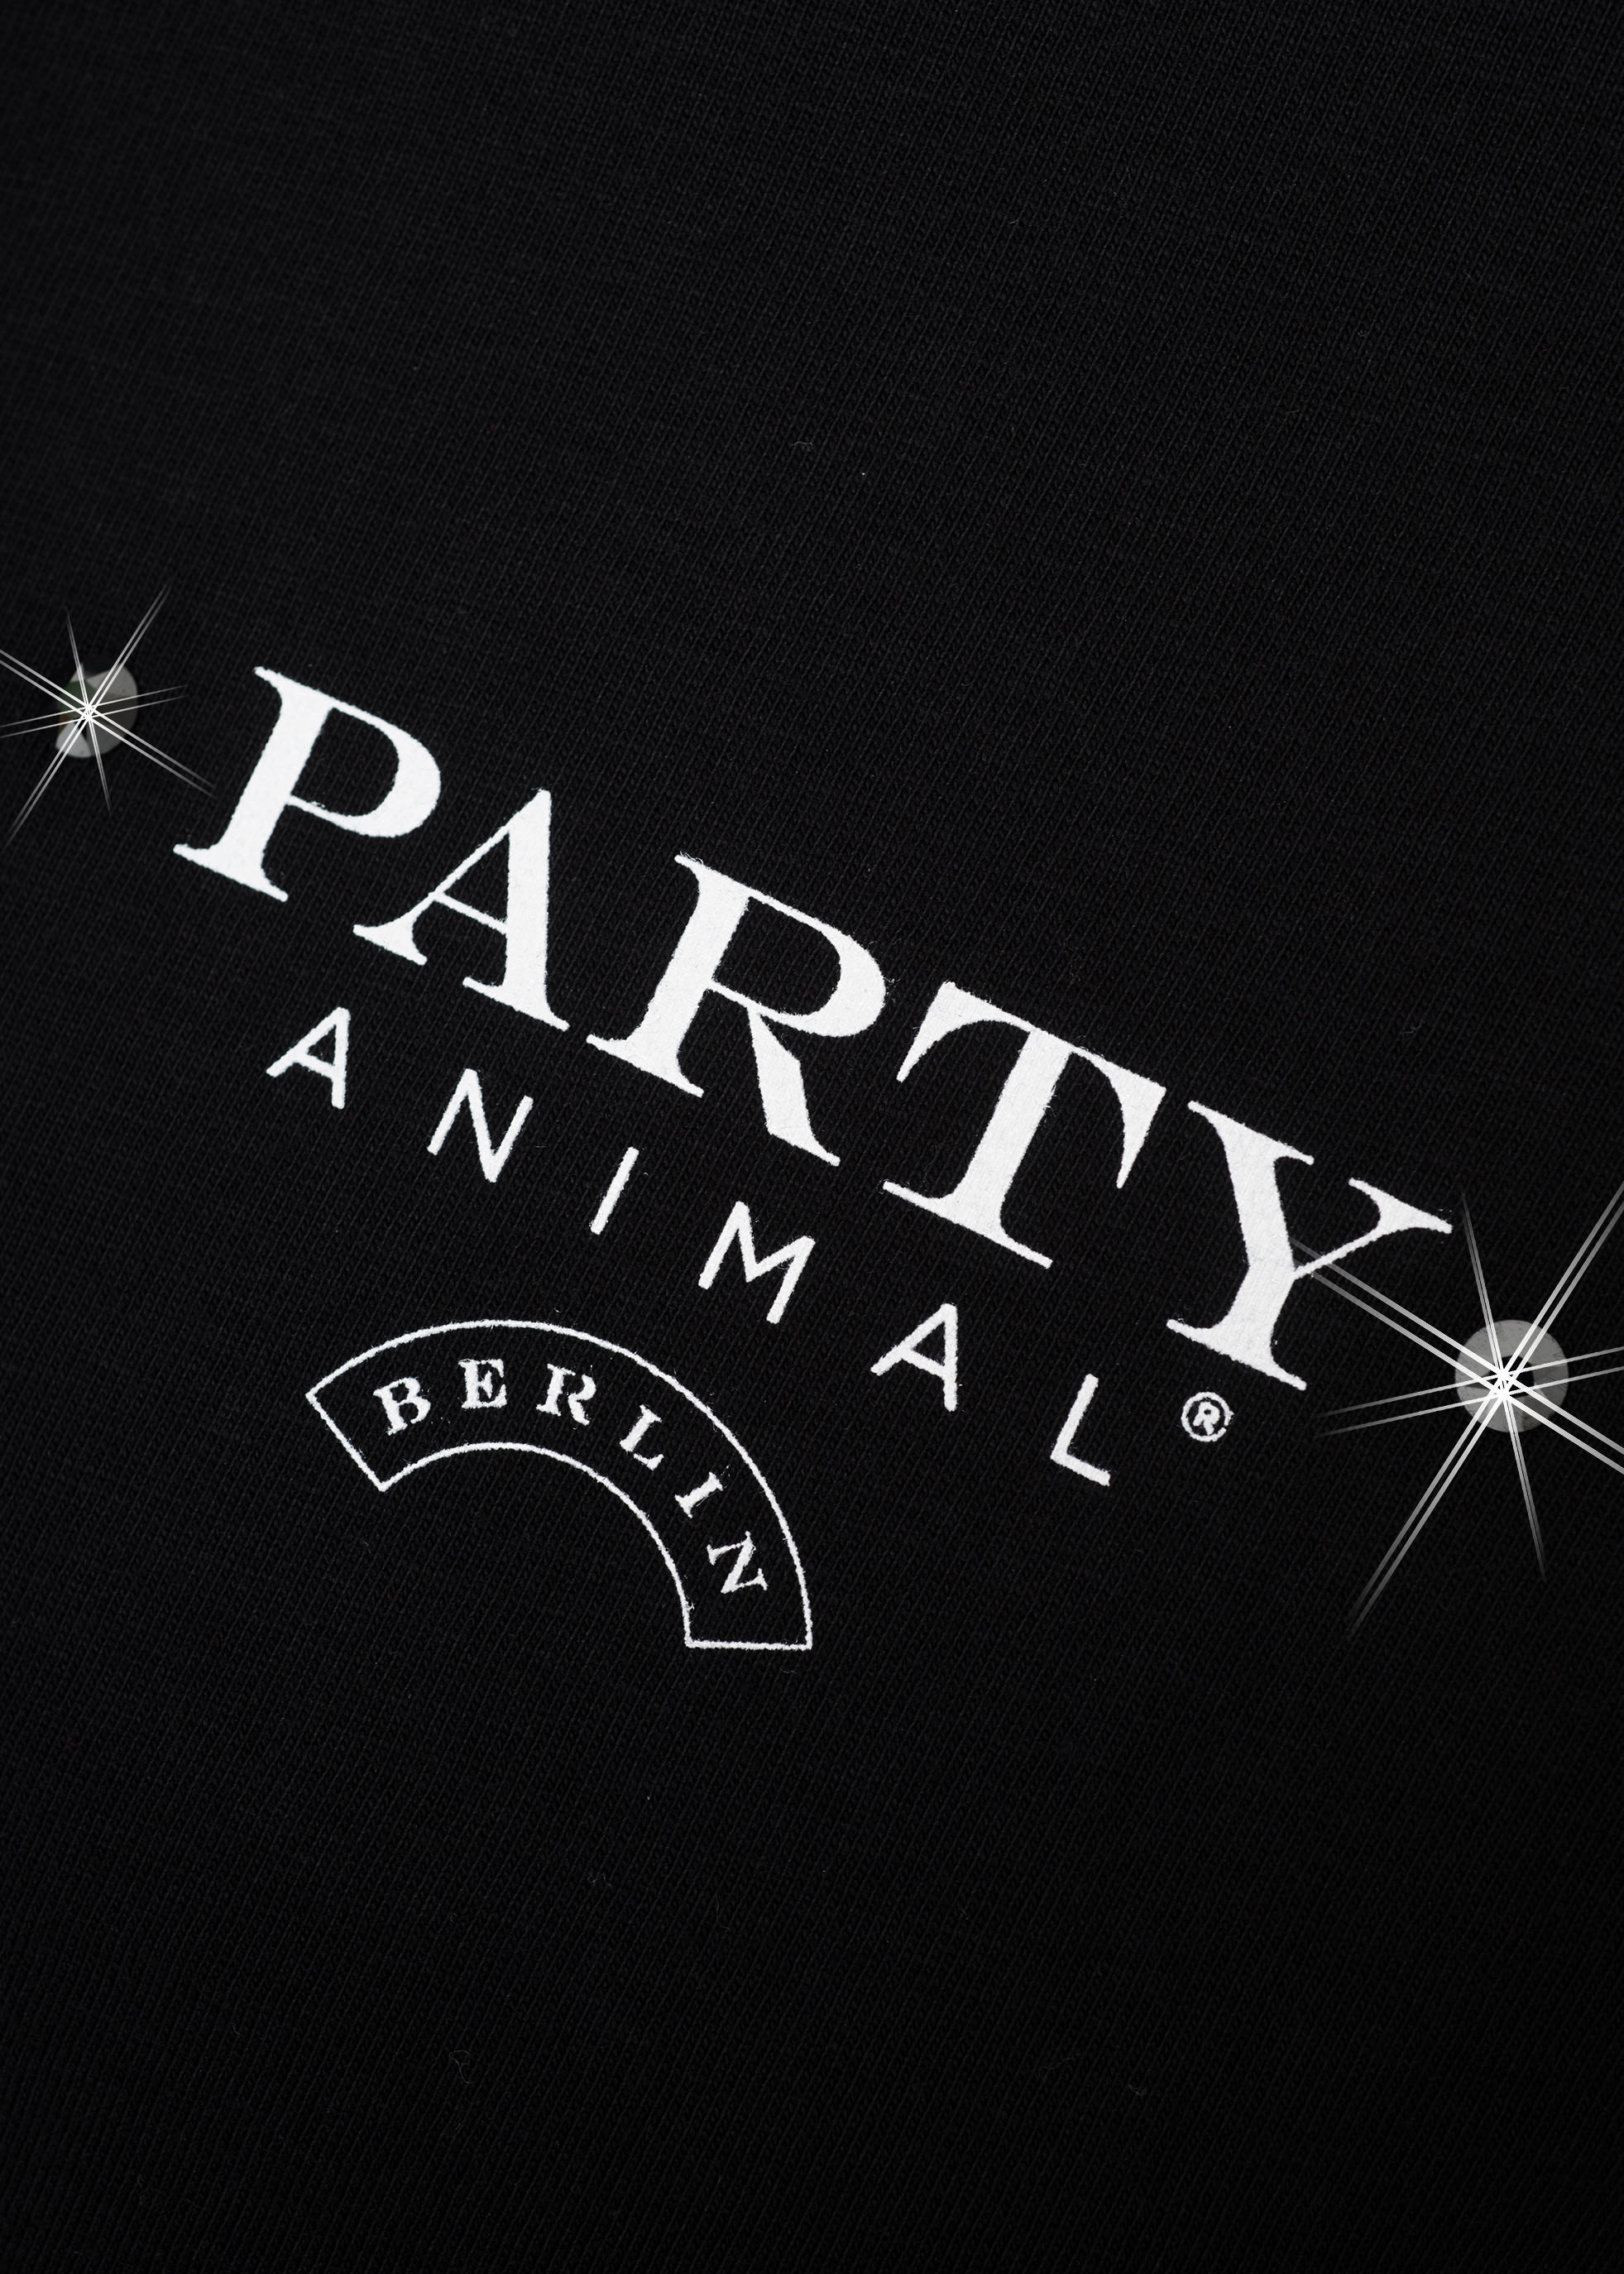 Party Animal Berlin T-Shirt